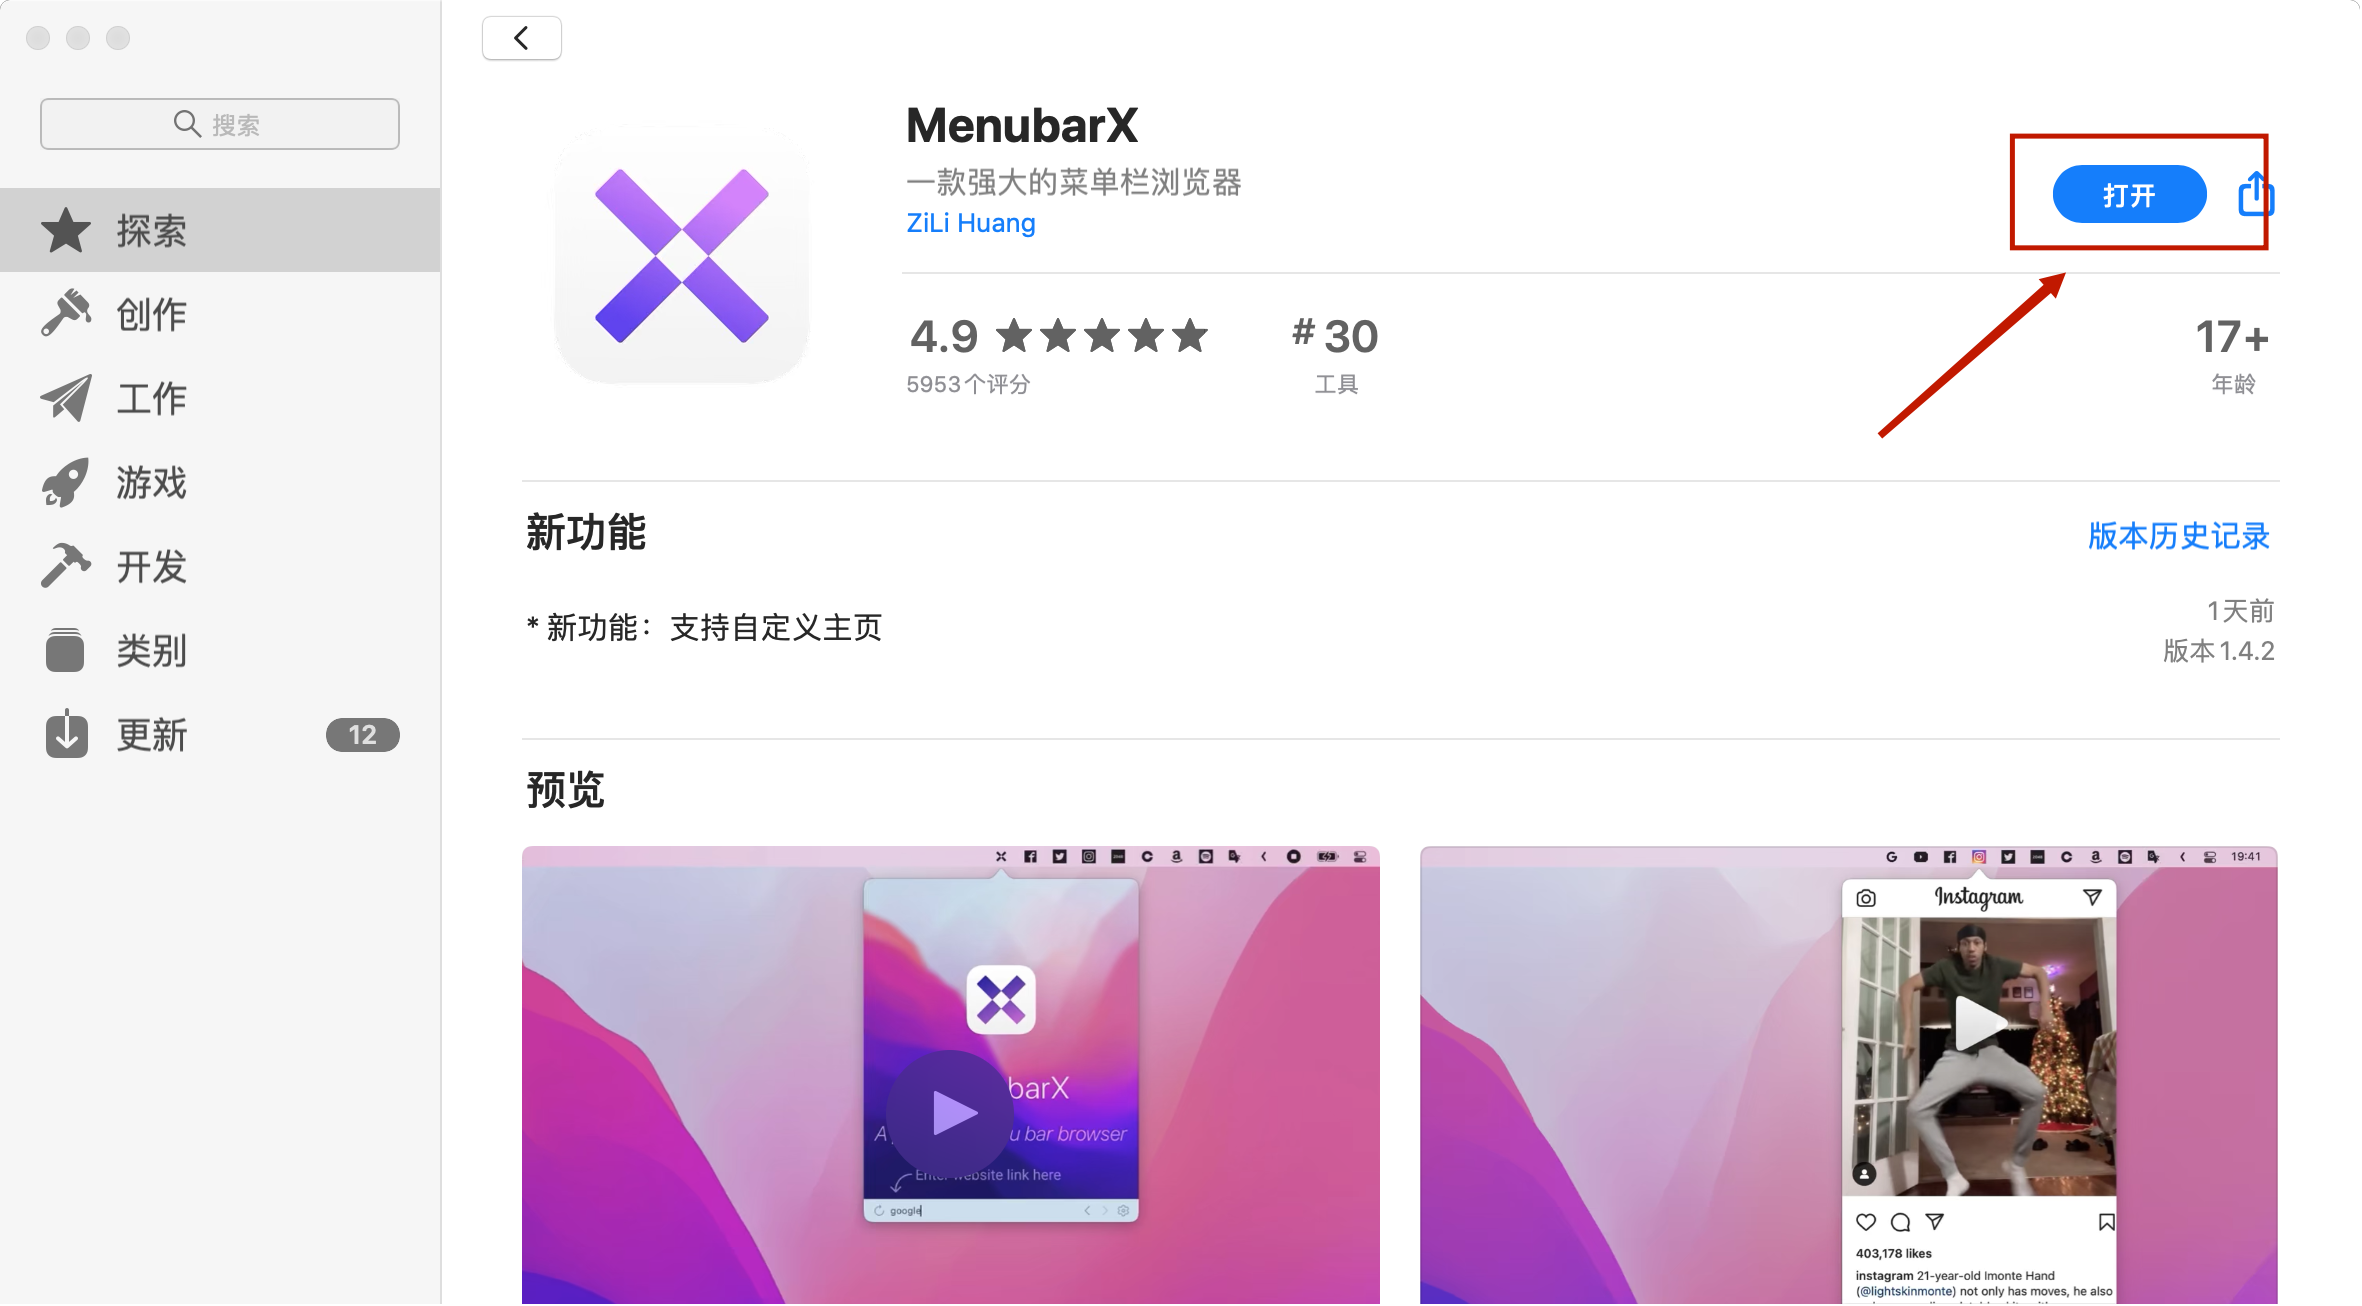 Go to Apple's App Store, install MenubarX